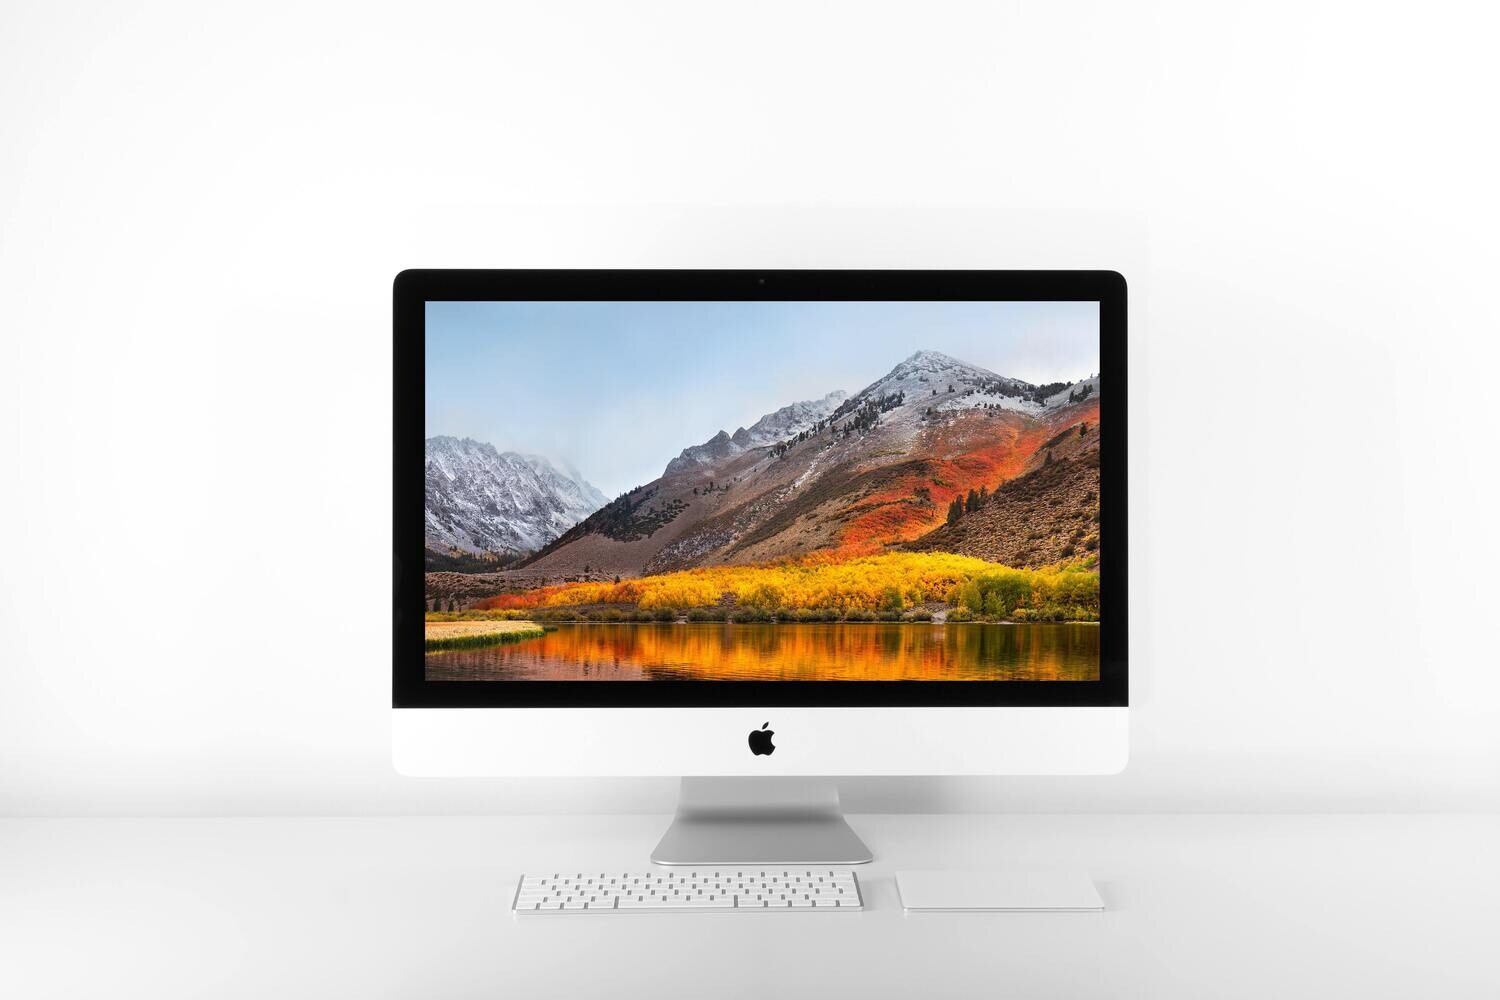 A5 Manual to accompany a MacBook / iMac